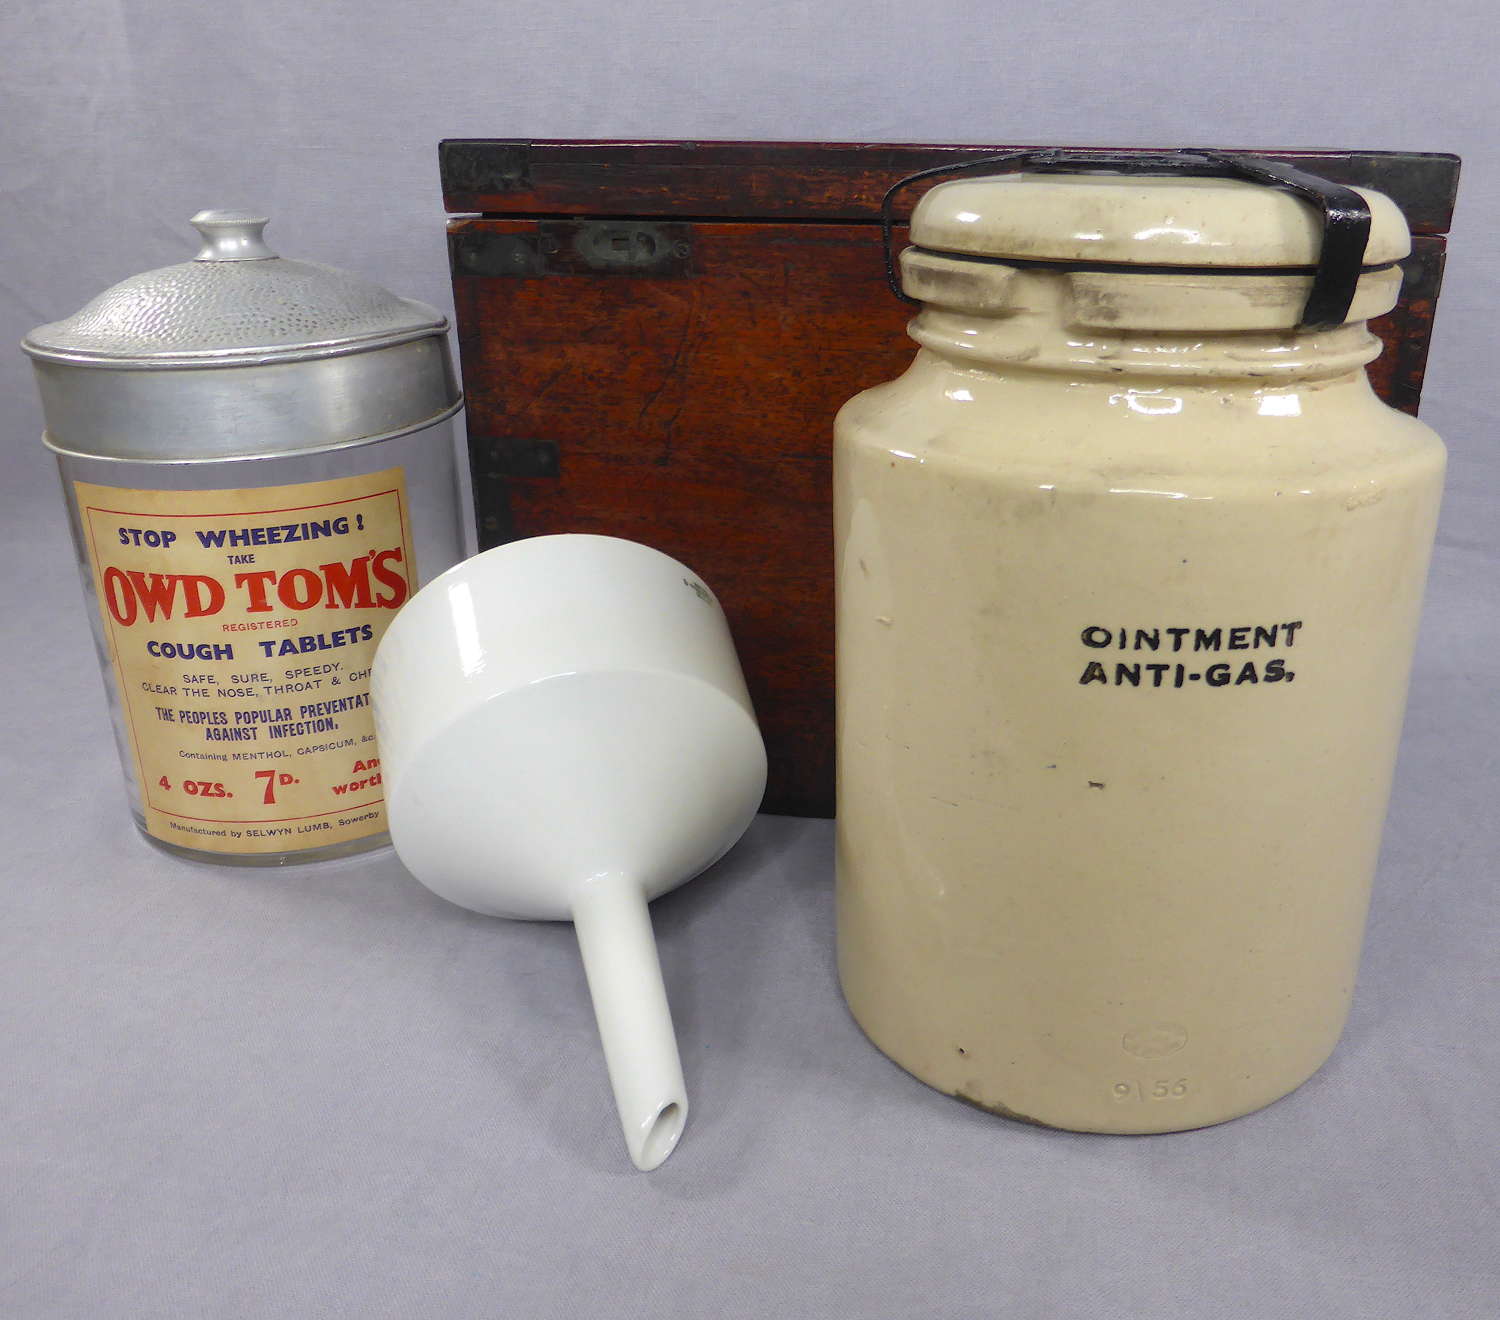 Anti-Gas ointment jar